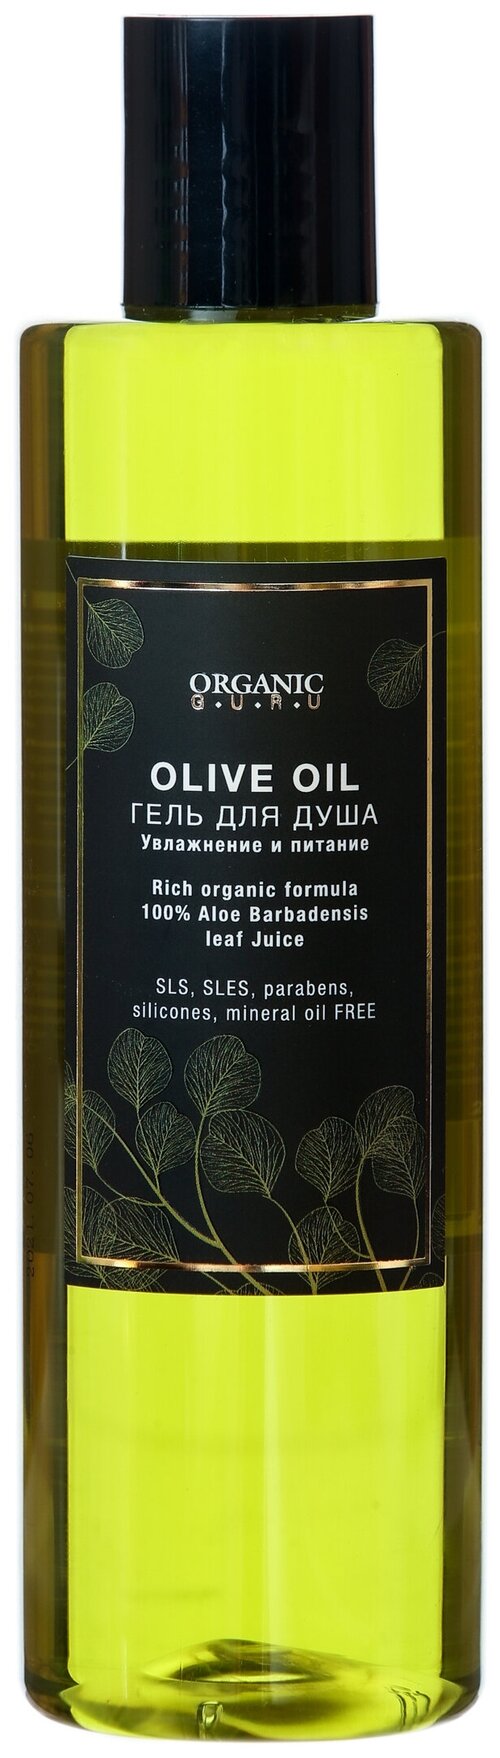 Гель для душа Organic Guru OLIVE OIL,250 мл.